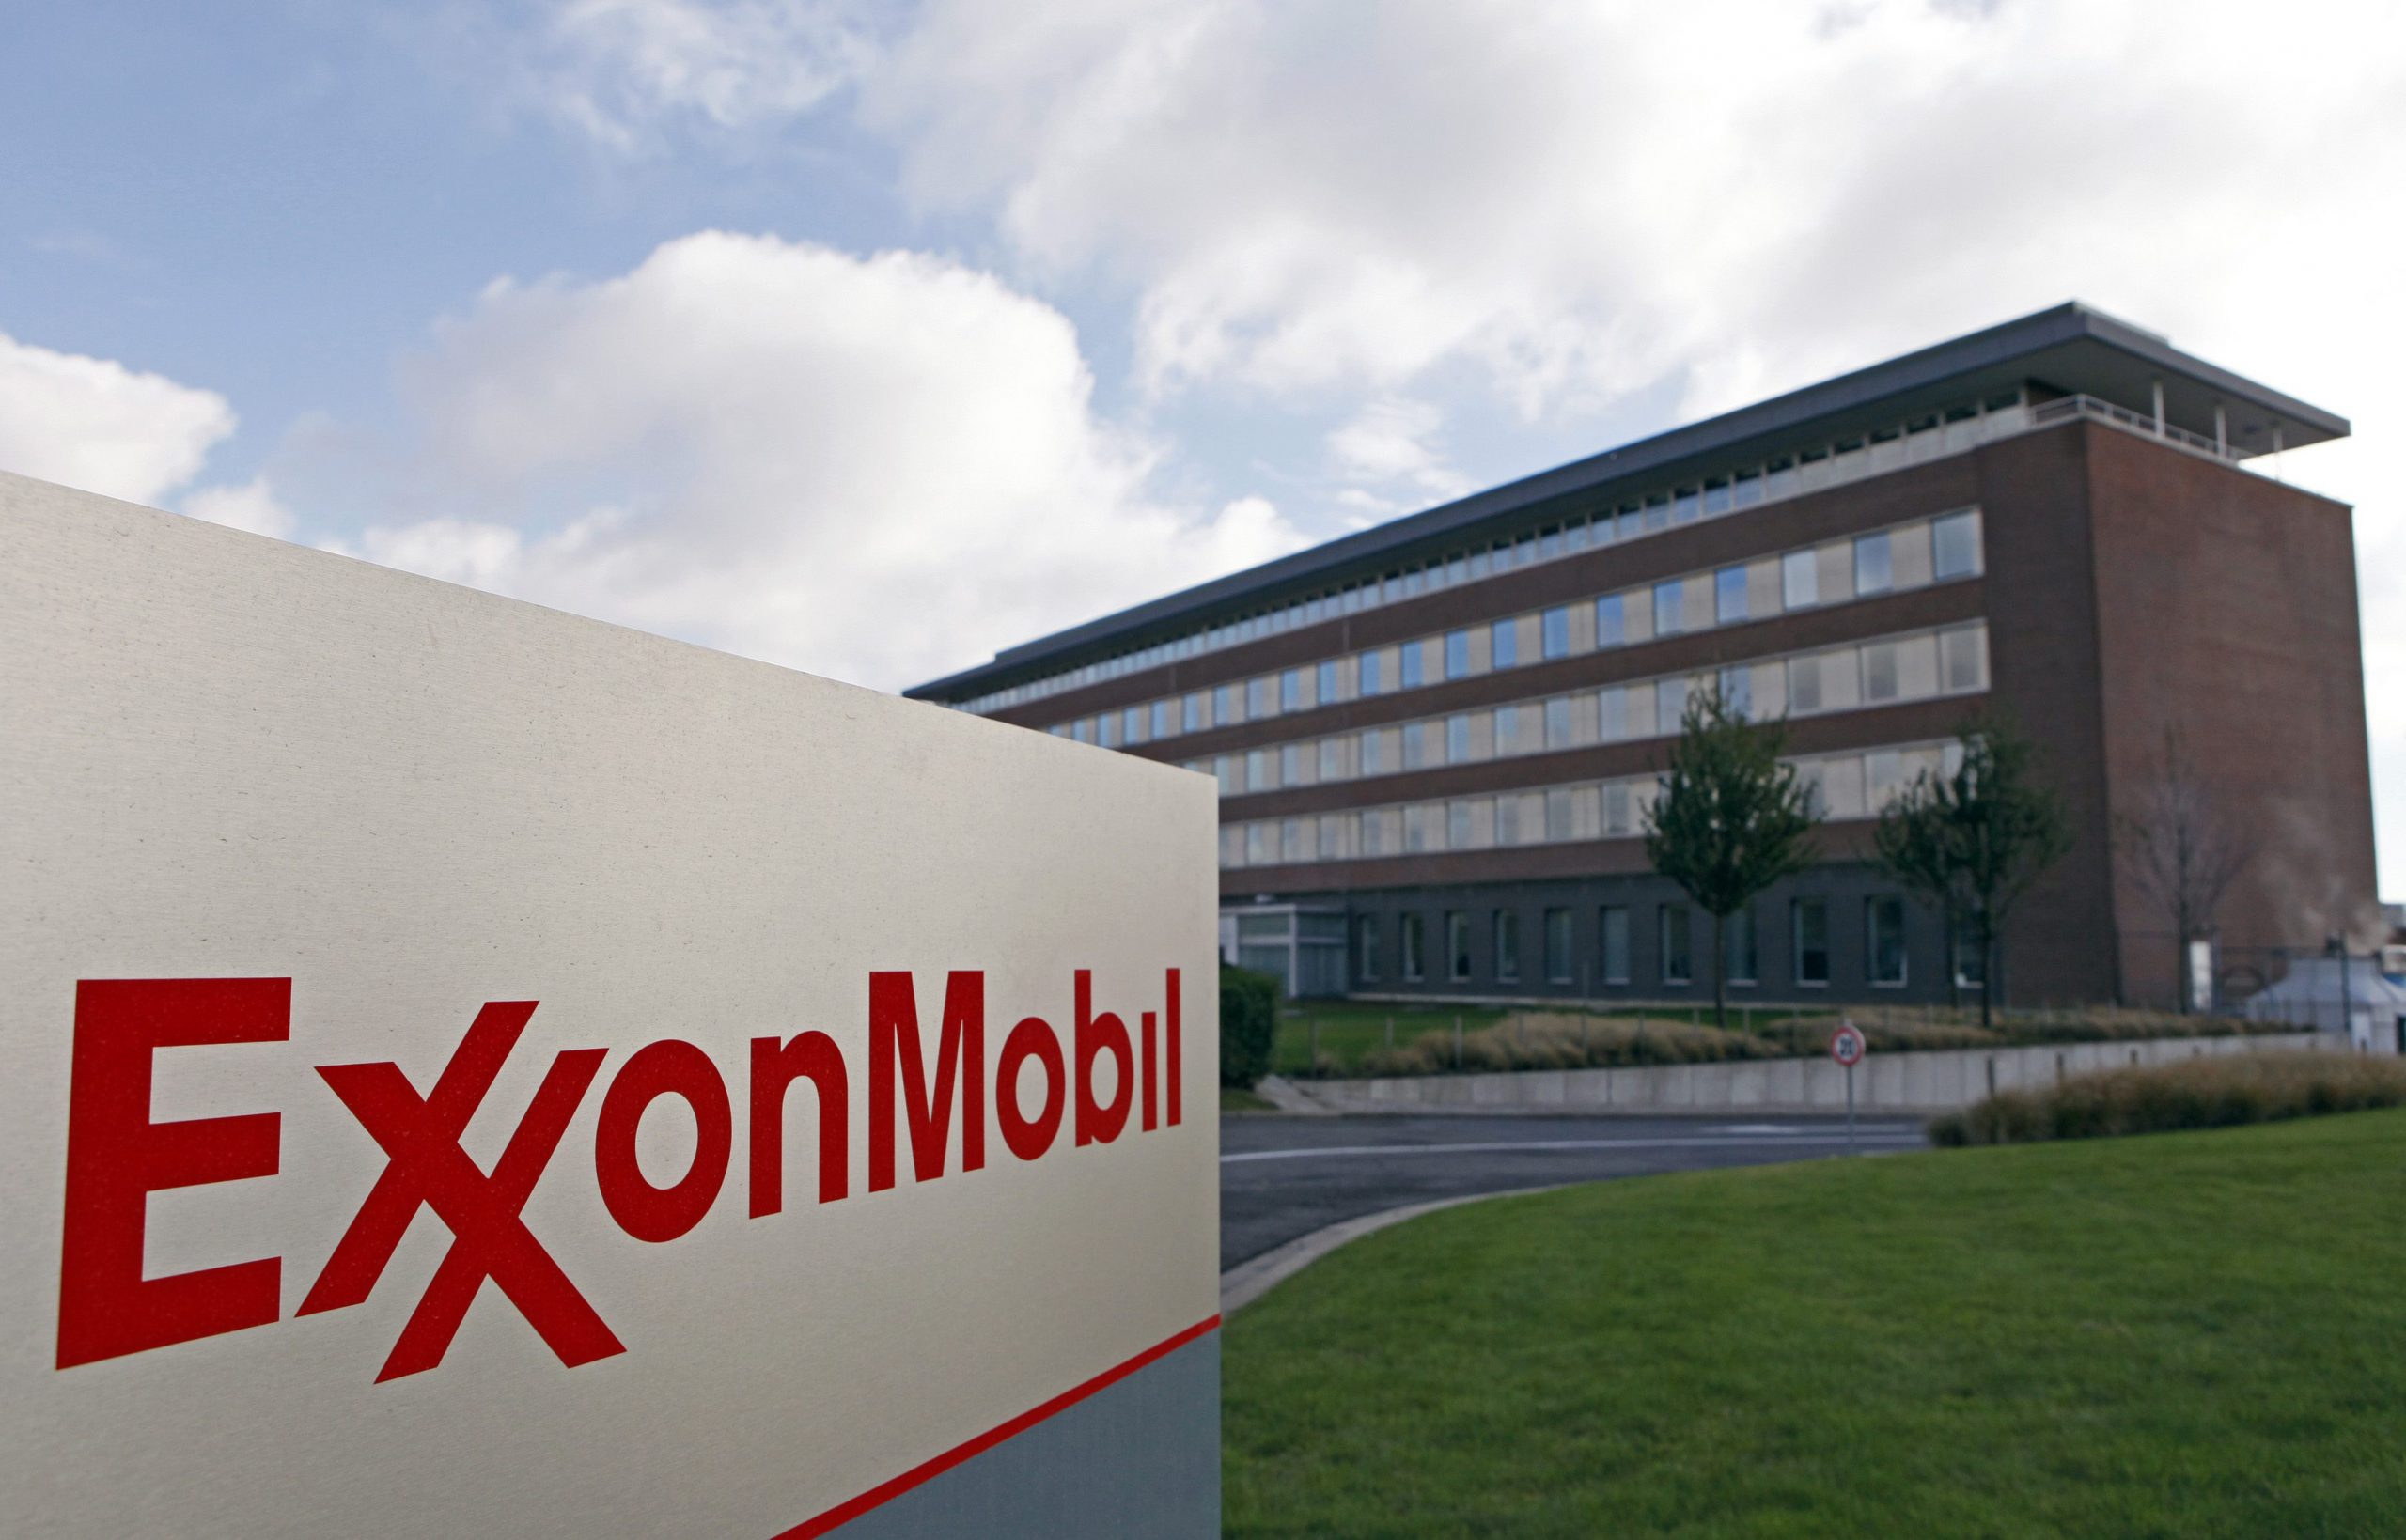 tendra-repercusiones-para-venezuela-esta-decision-de-exxon